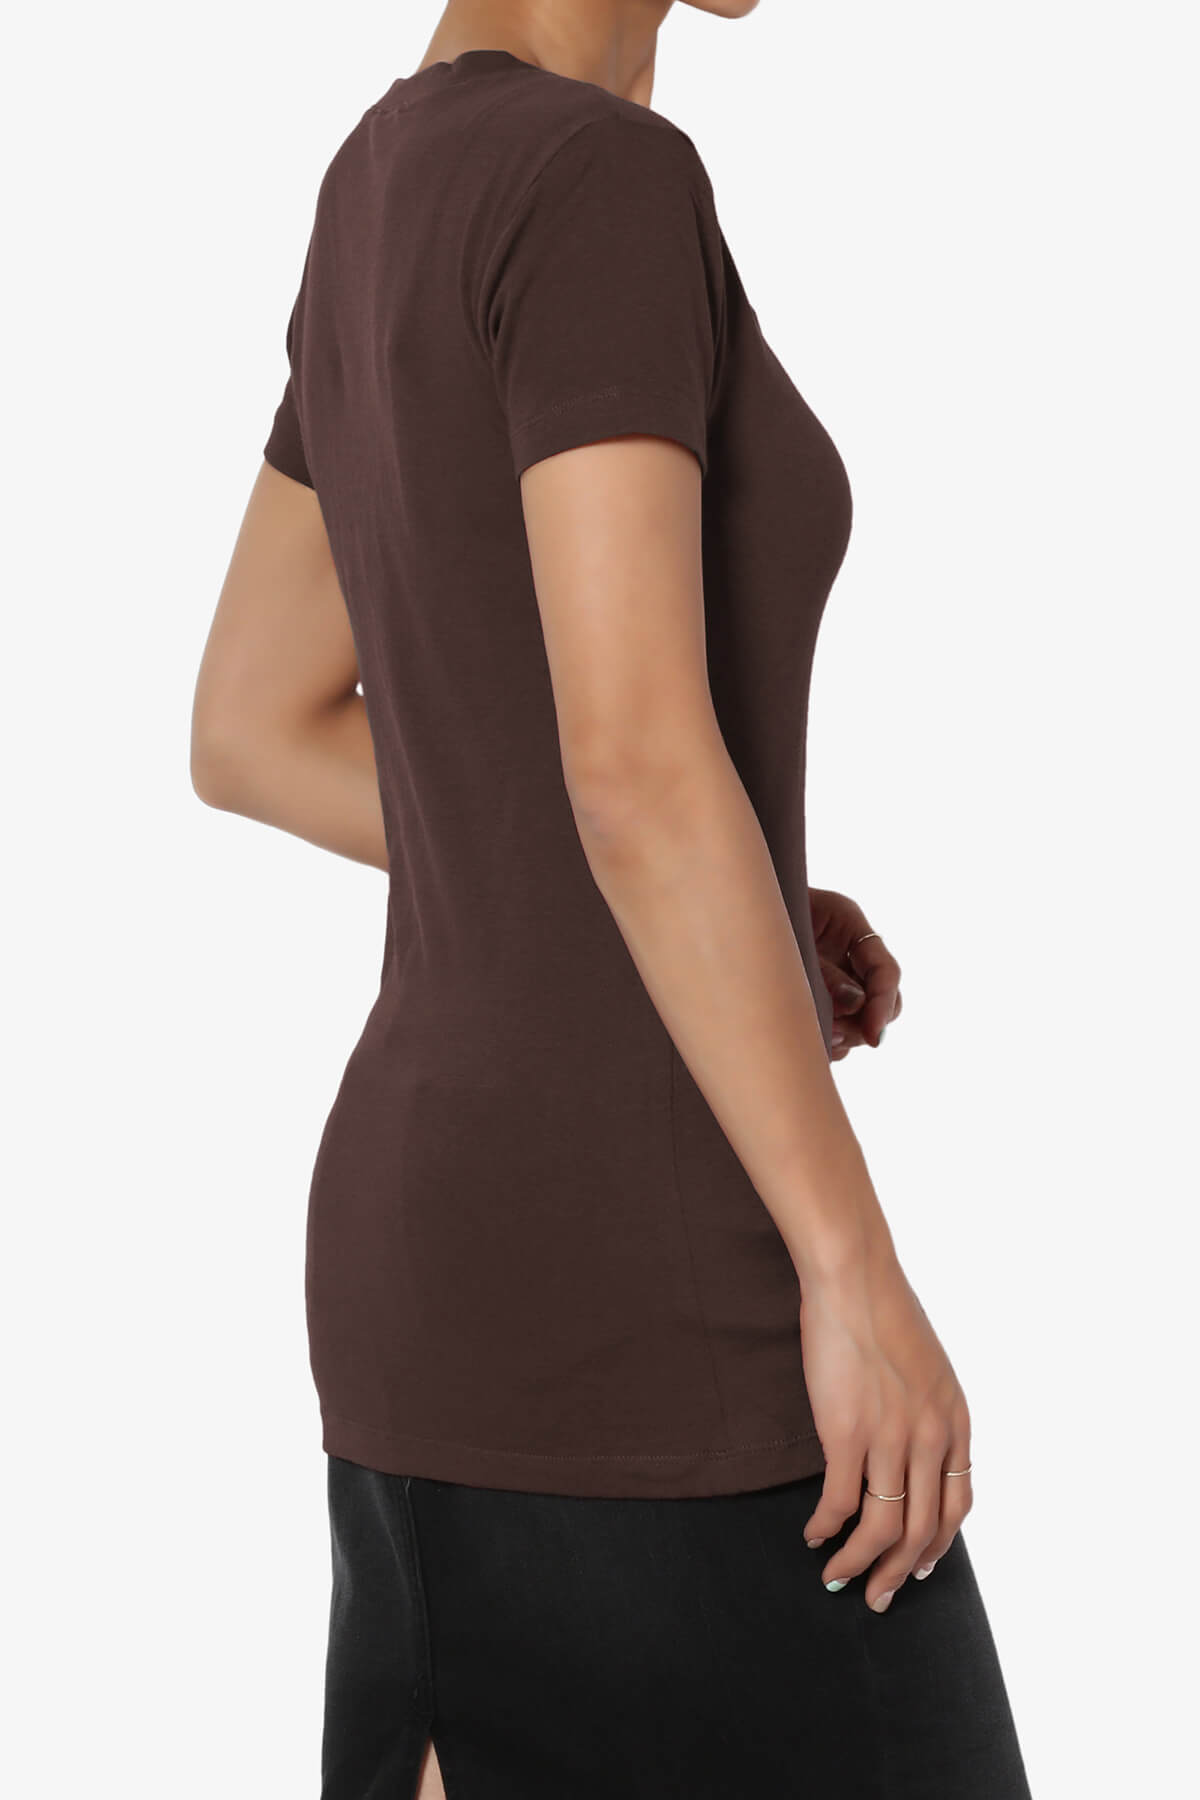 Women's Basic V Neck Short Sleeve T-Shirts Plain Stretch Cotton Spandex Top Tee - image 4 of 6